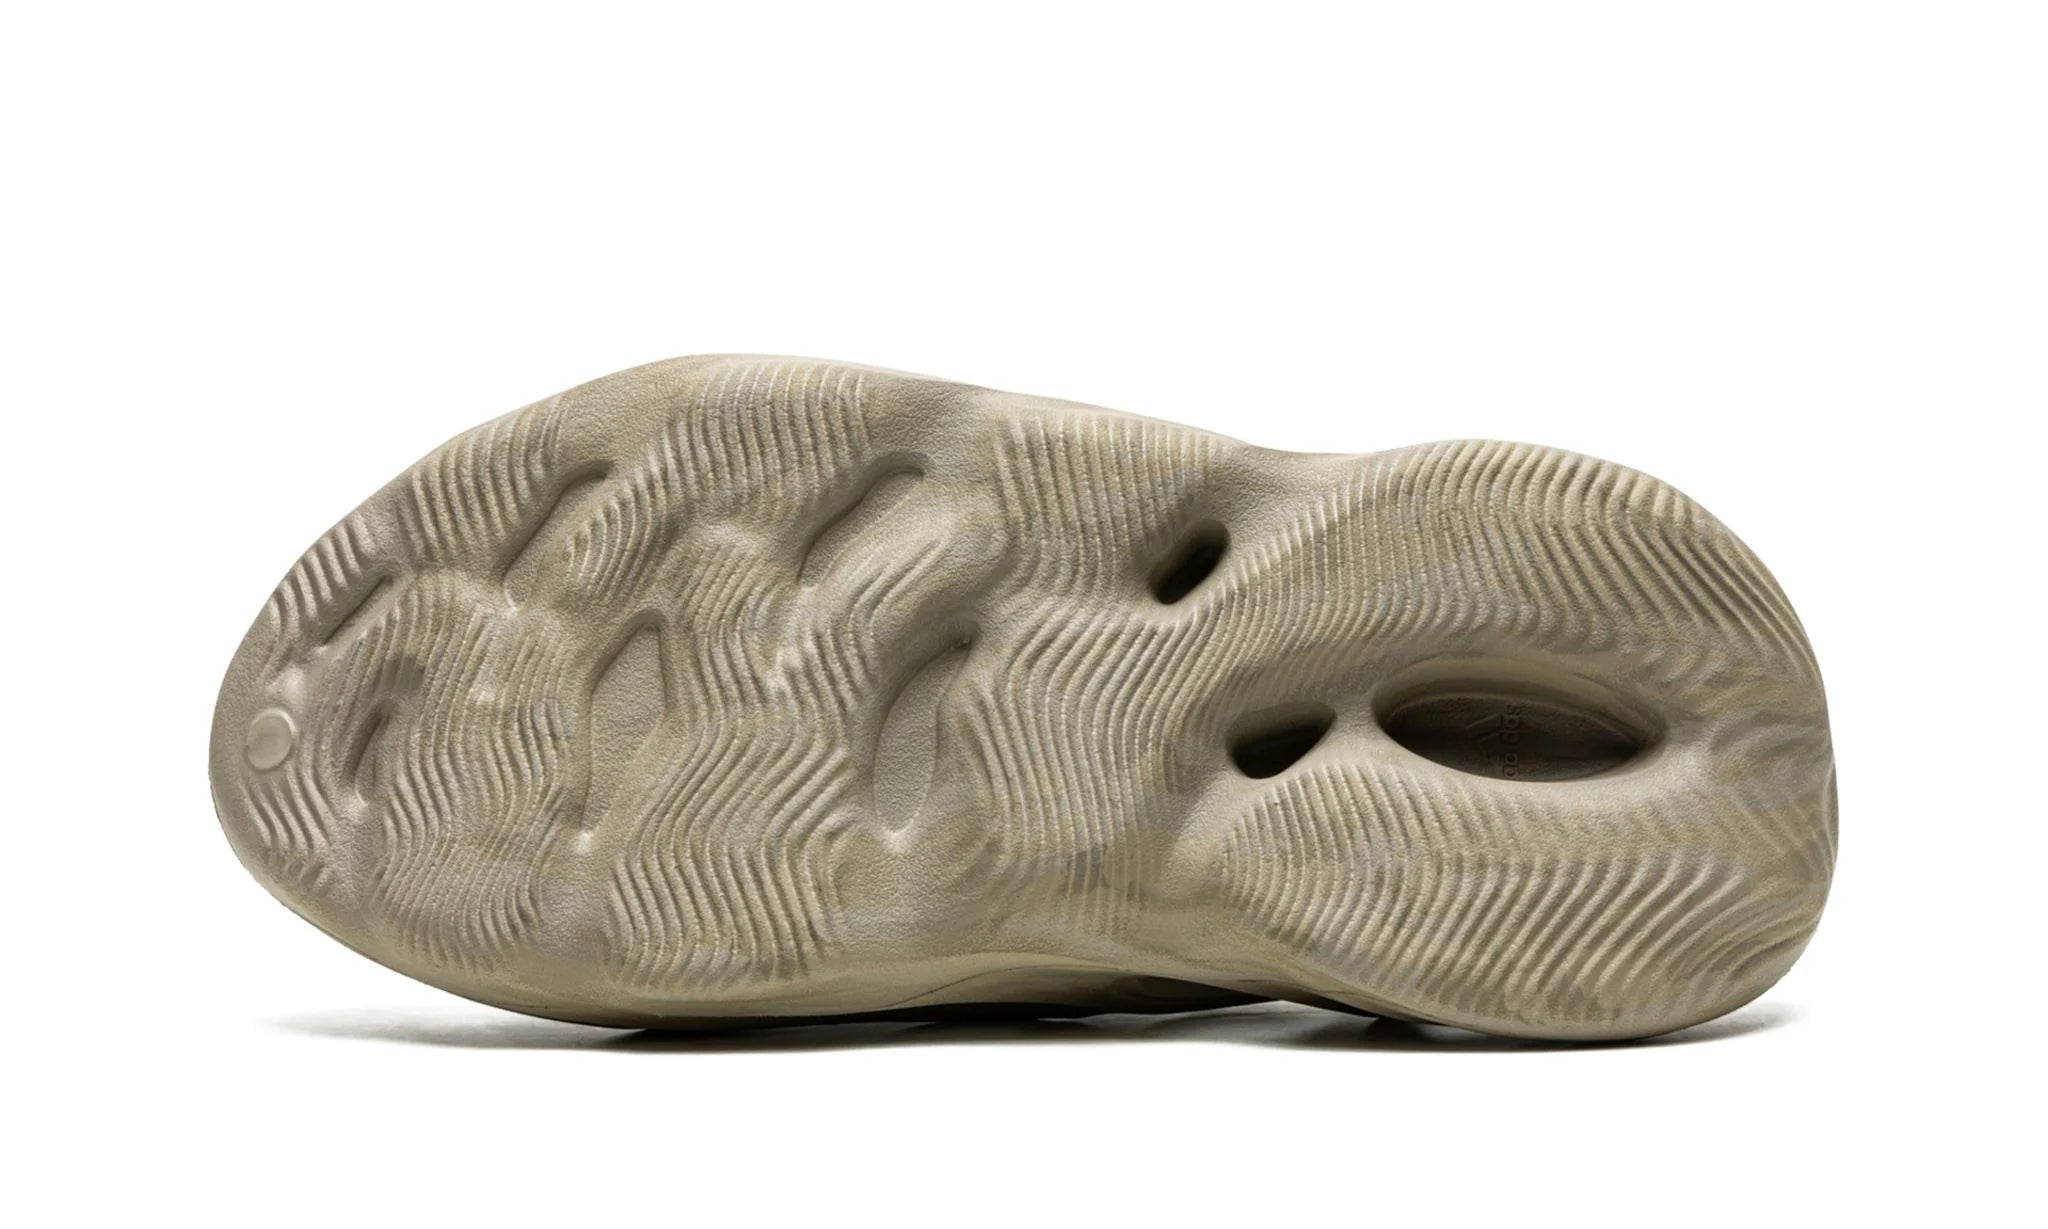 Adidas Yeezy Foam Runner Stone Sage - Yeezy Foam Runner - Pirri